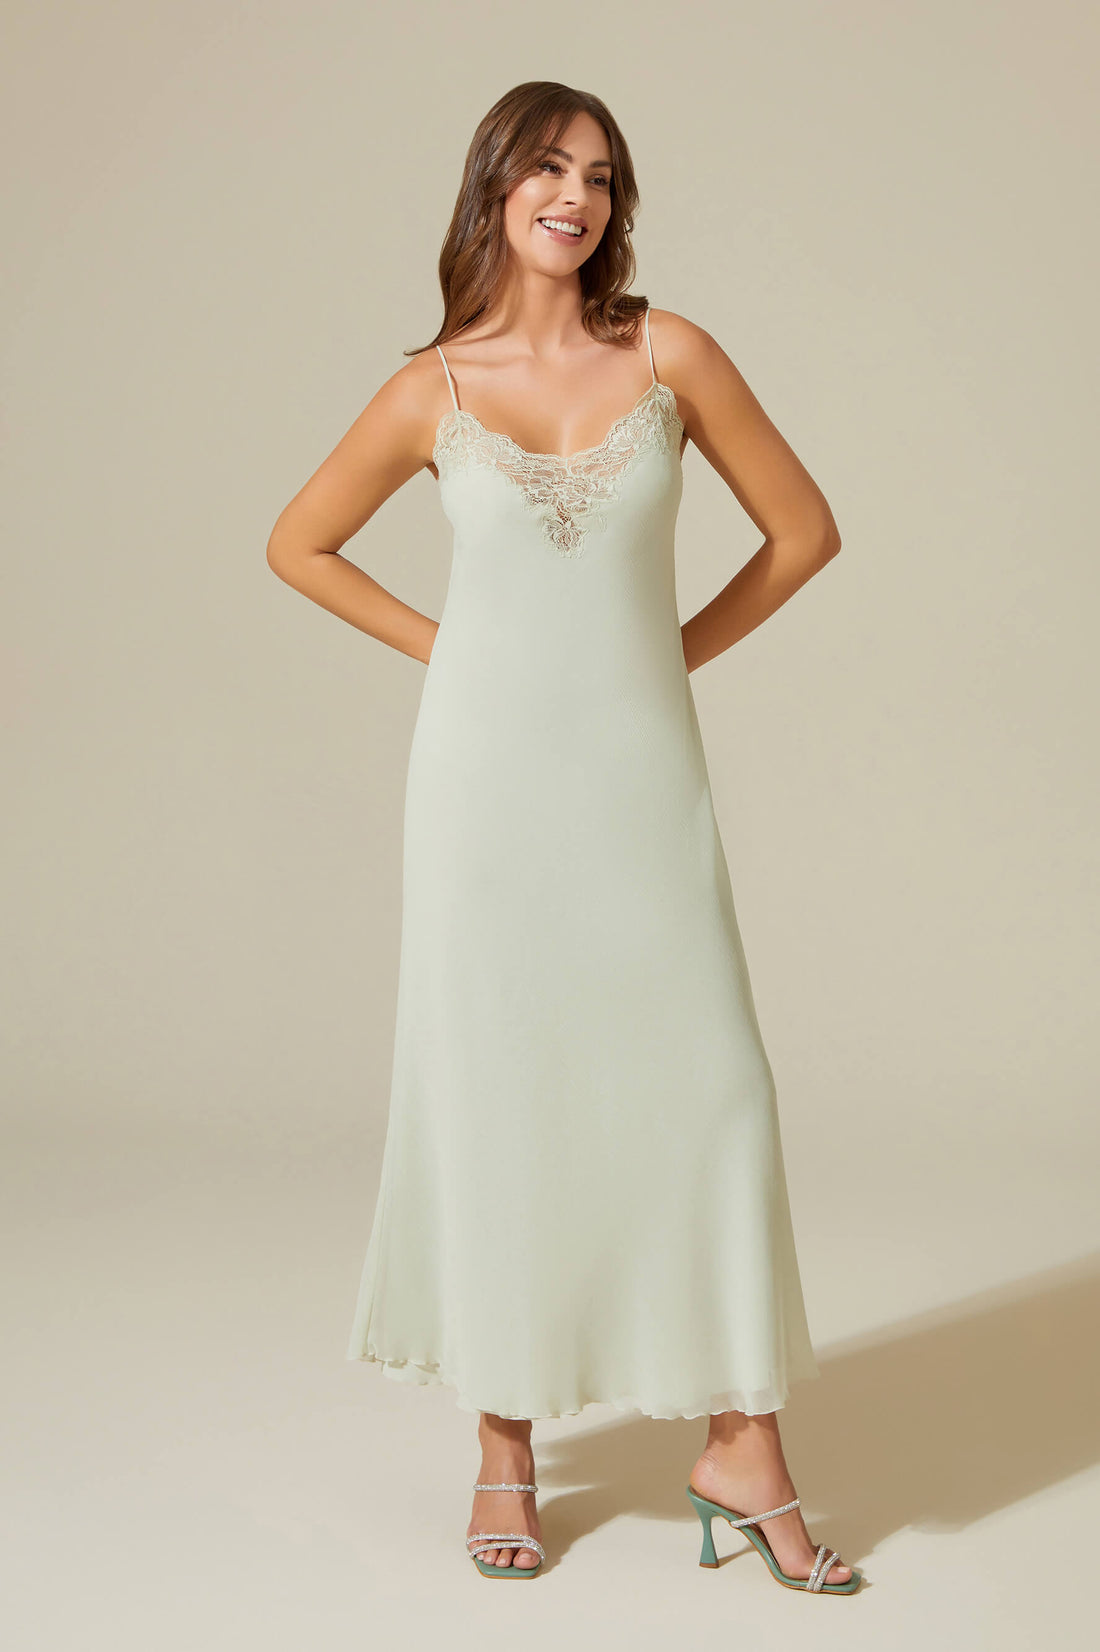 Buy White Linen Nightie Linen Strap Dress Night Dress Nightgown